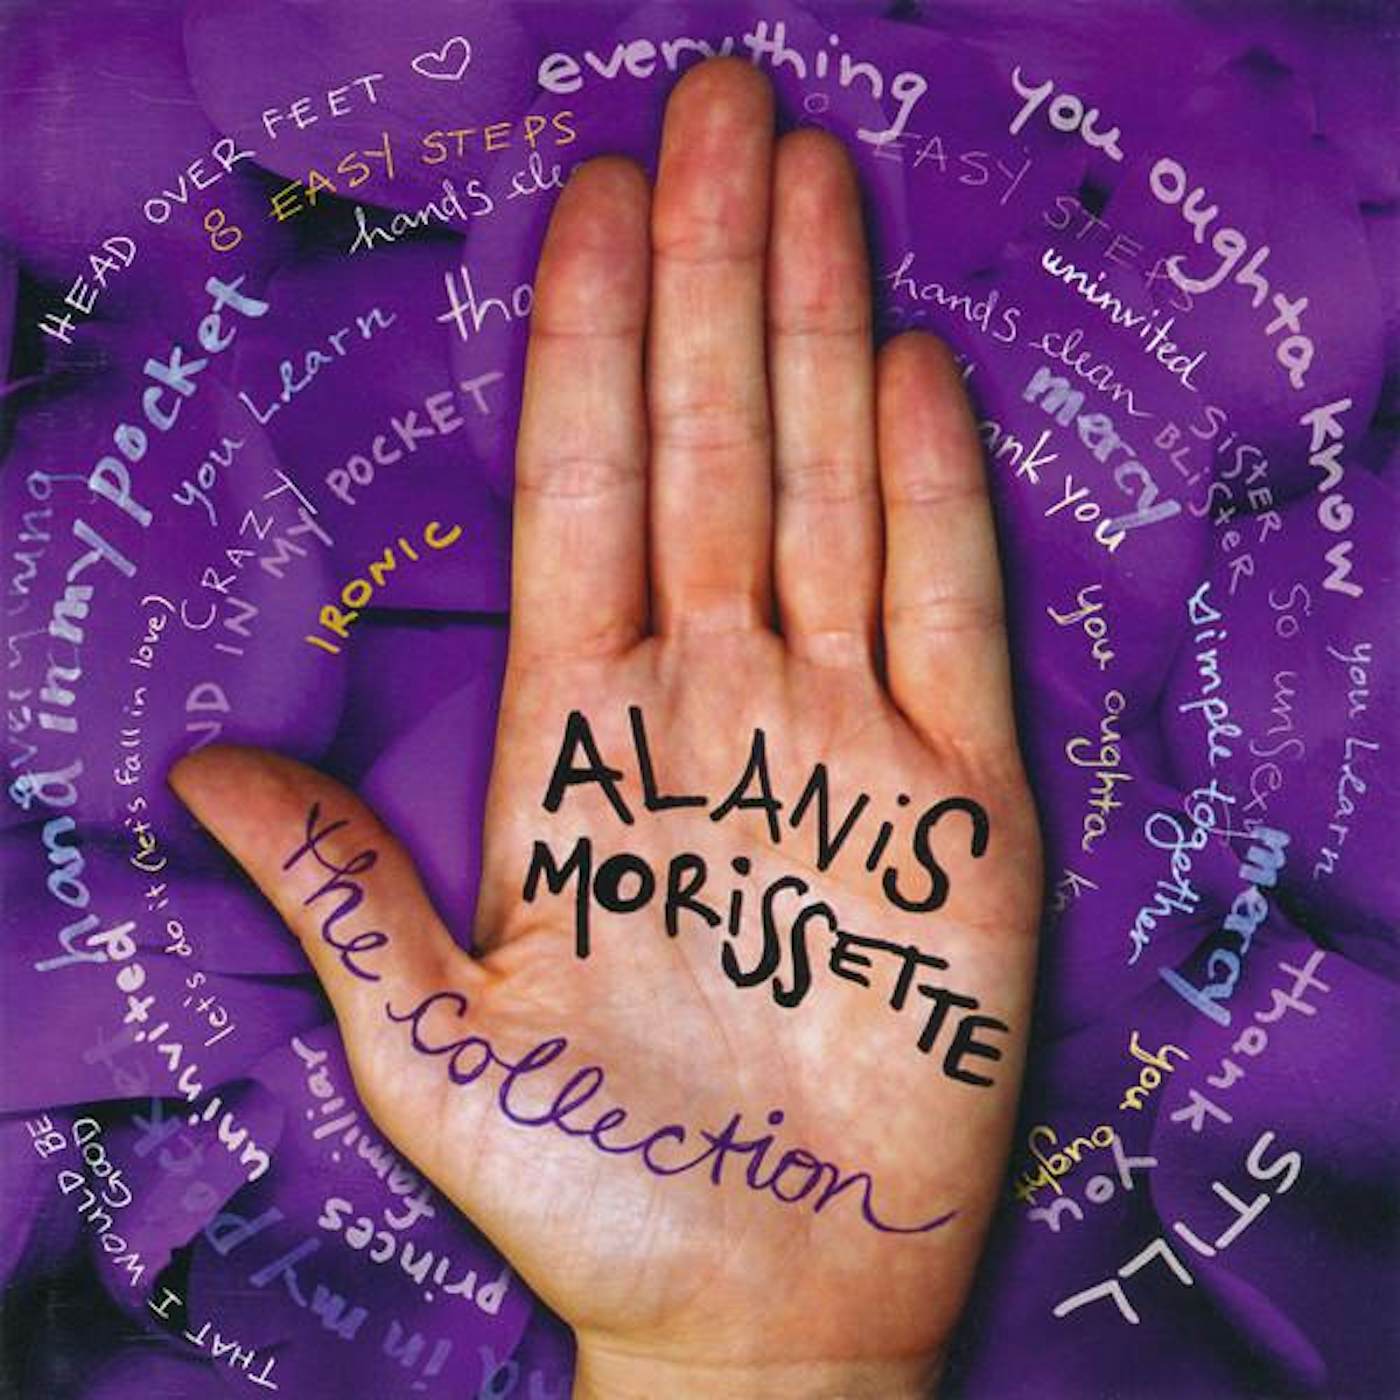 Alanis Morissette COLLECTION CD